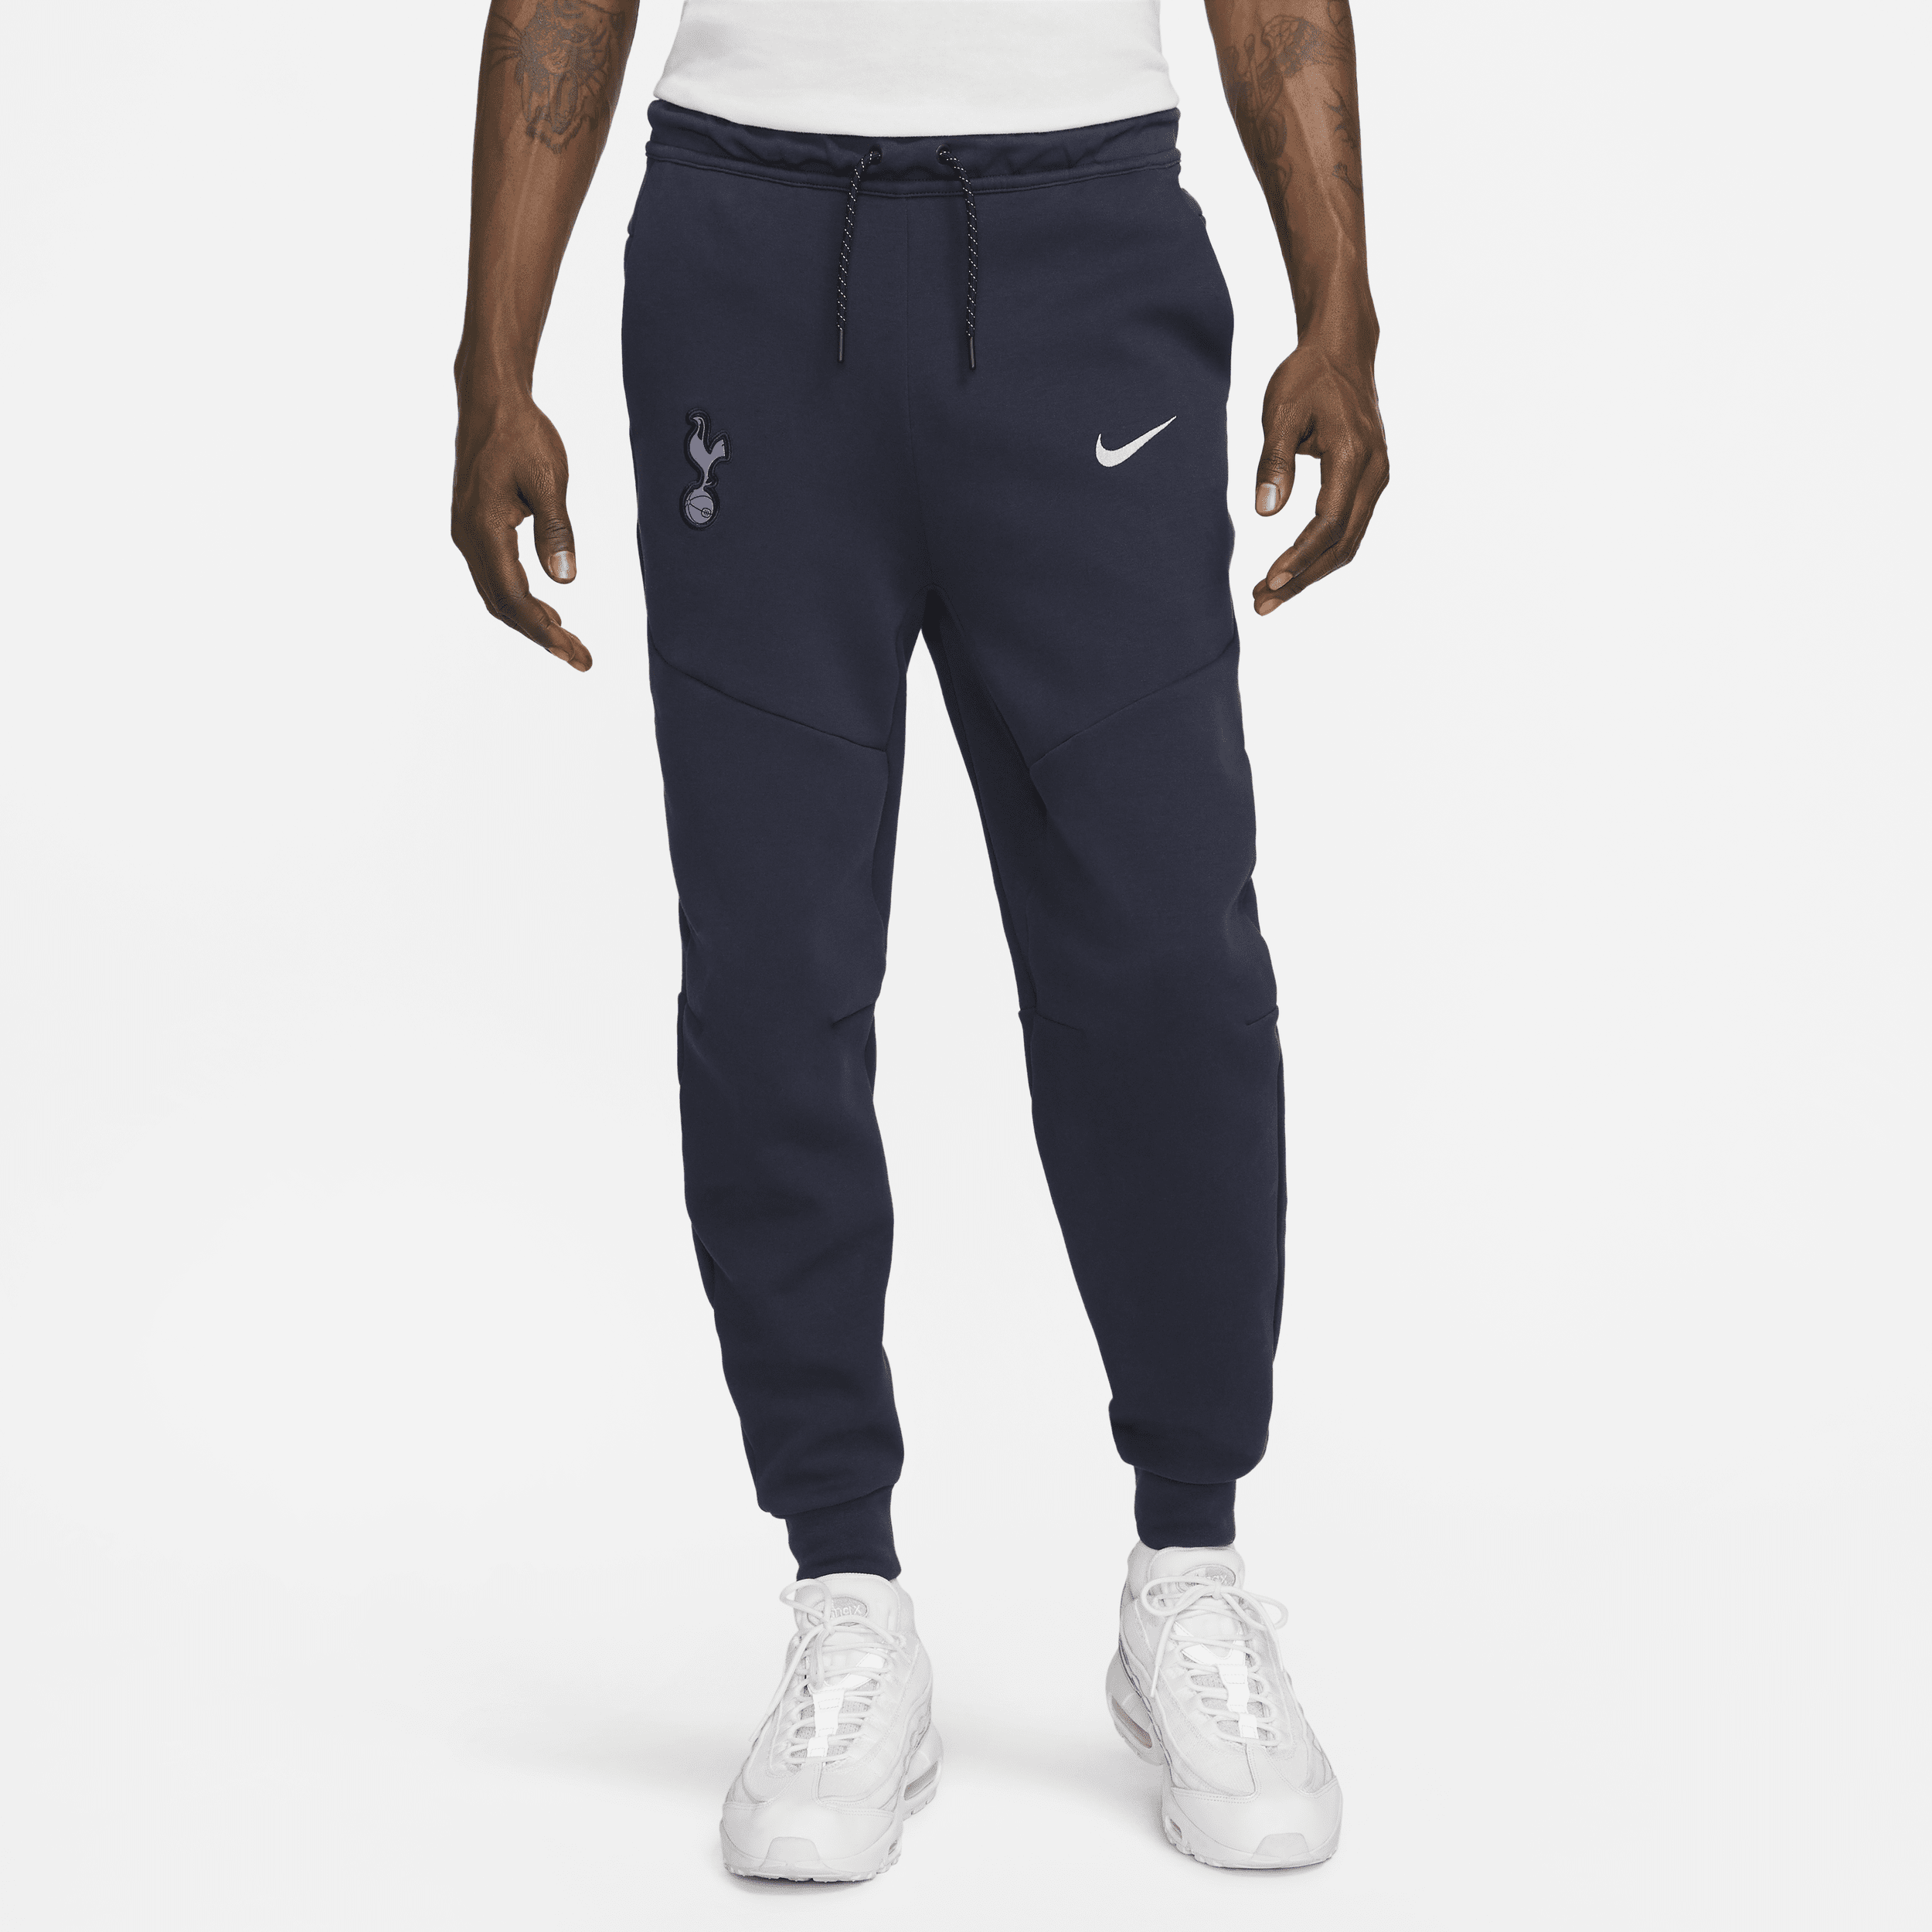 Pantaloni jogger Nike Tottenham Hotspur Tech Fleece – Uomo - Blu